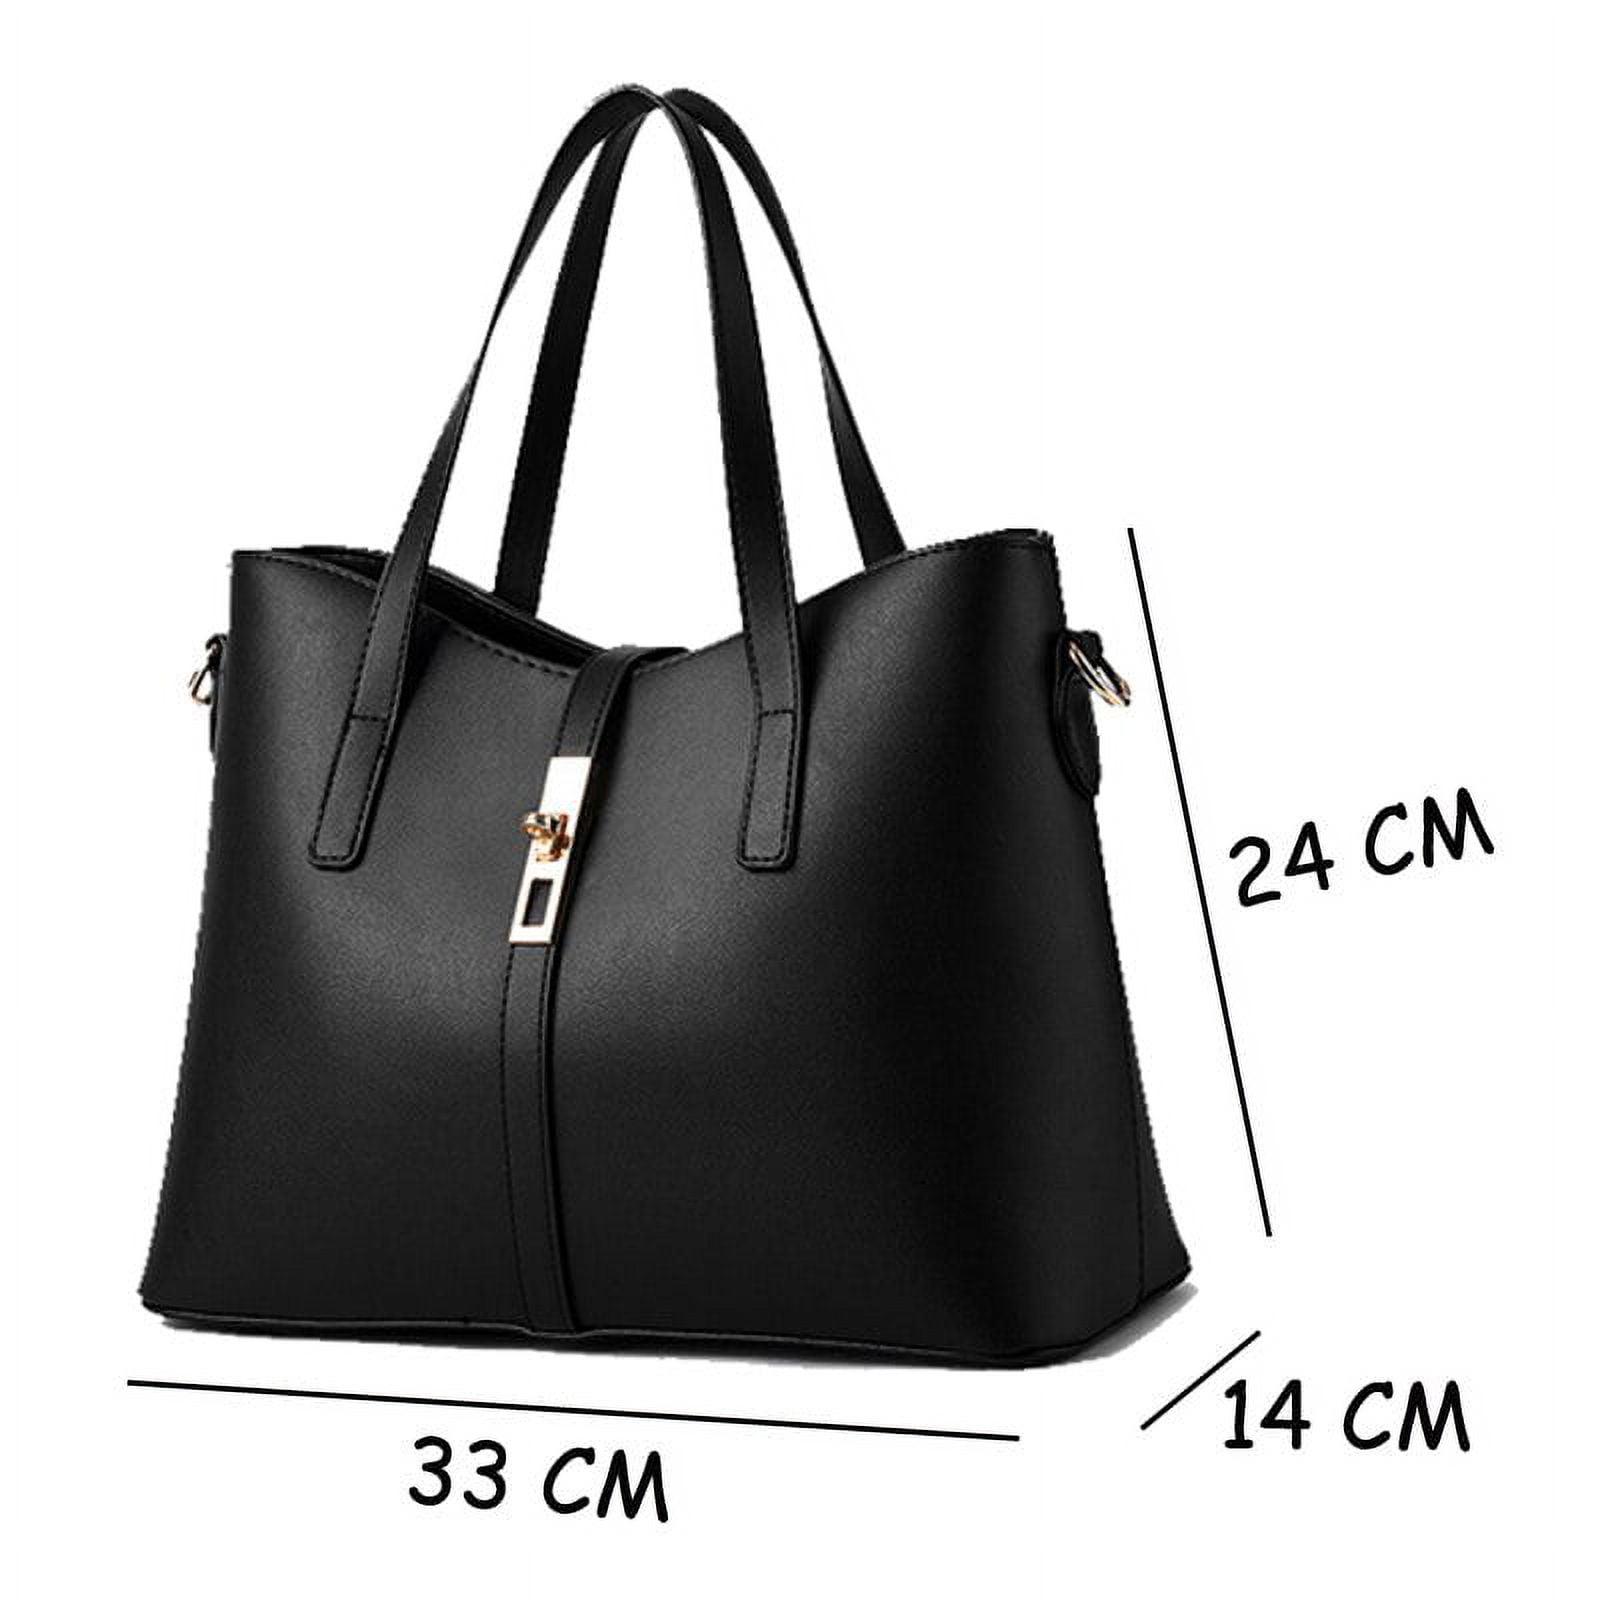 Shop Black Handbags for Women on Farfetch ✓ Buy the latest 2019 Black  Handbags for Women online, Shipping to New York.